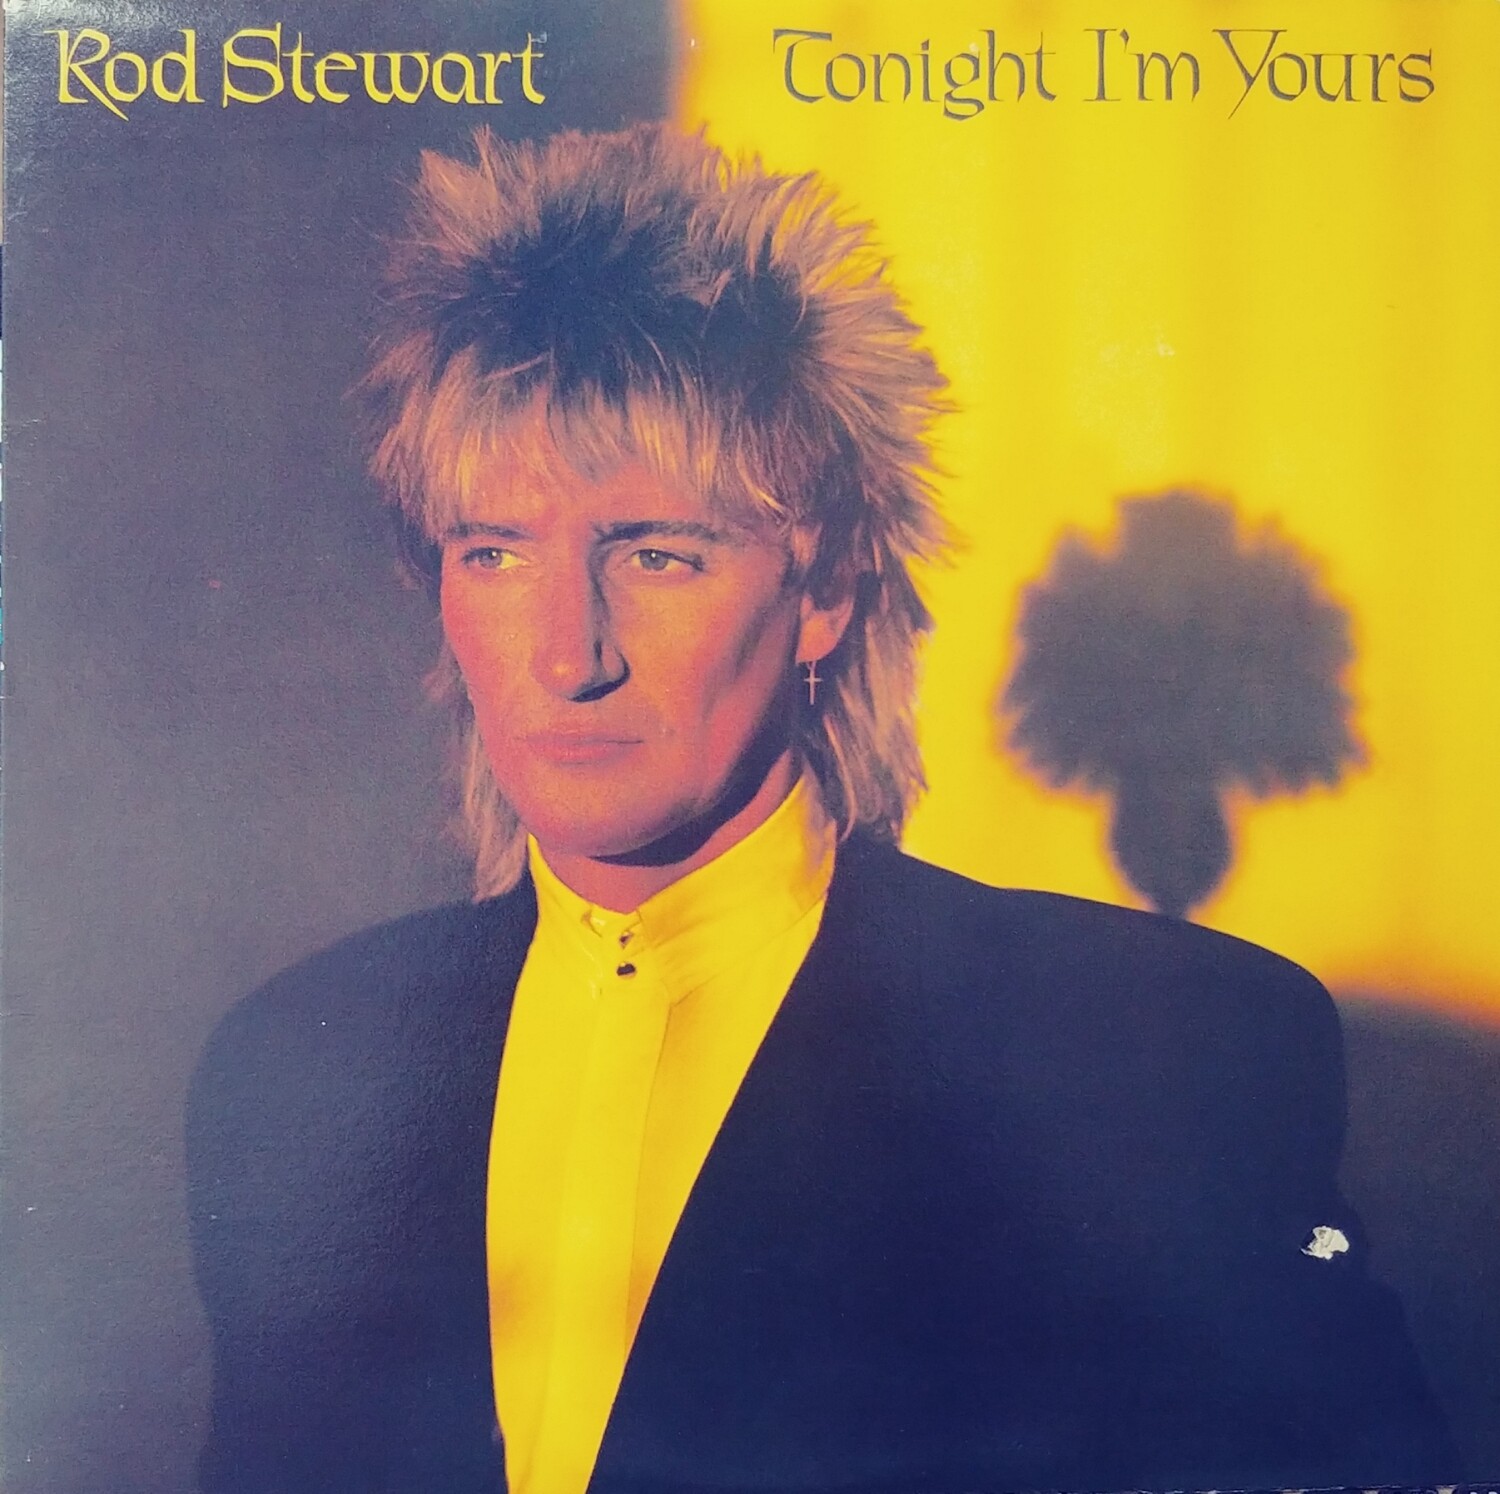 Rod Stewart - Tonight i'm yours